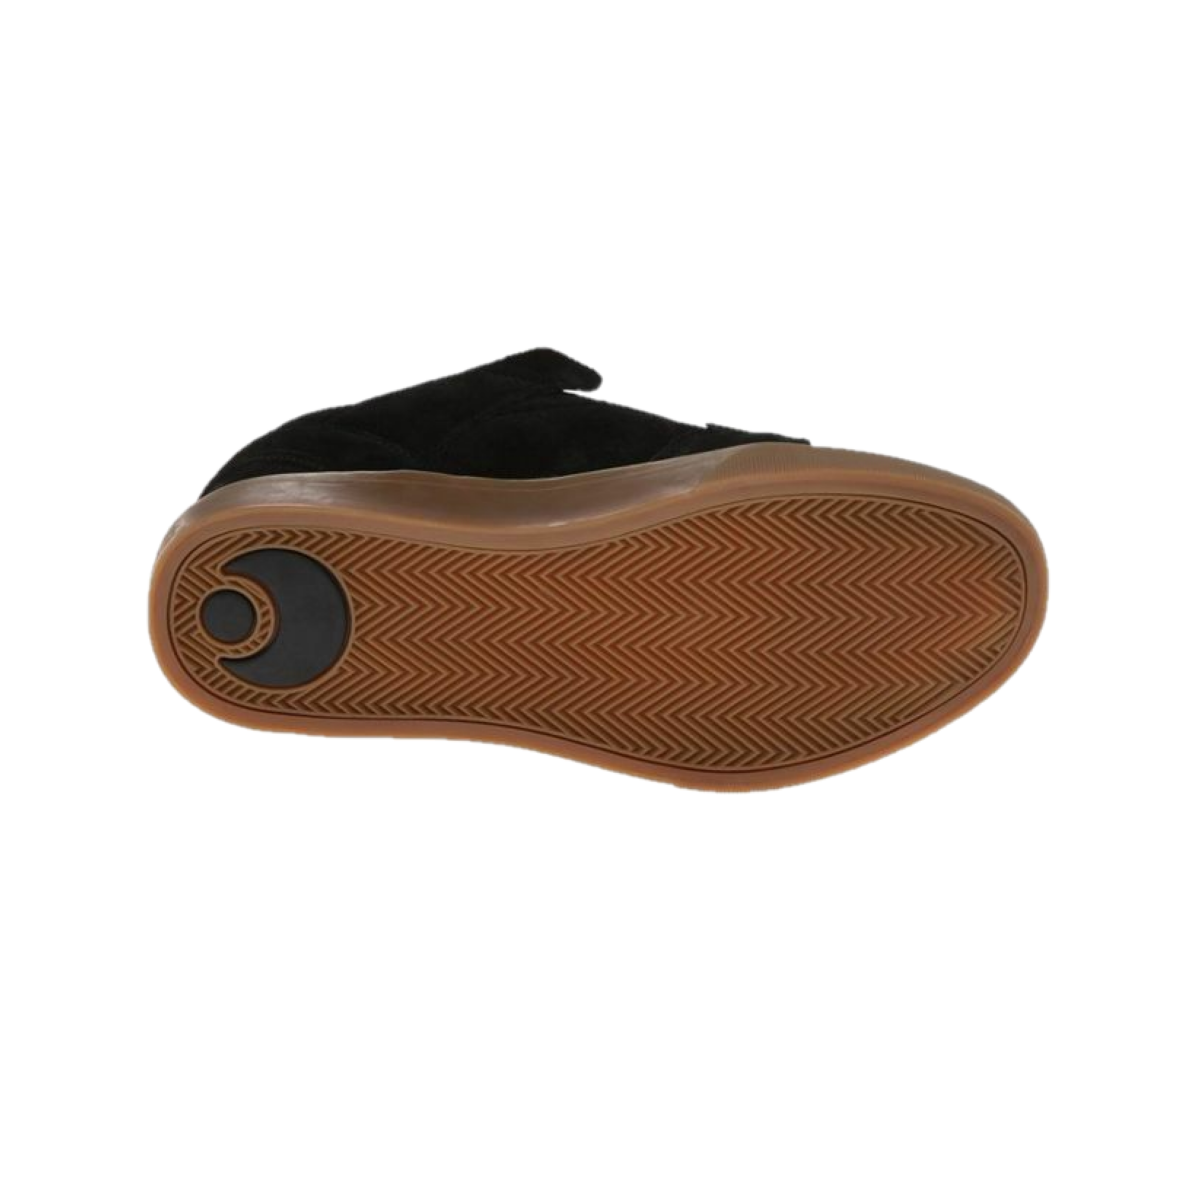 OSIRIS 1292103 PLG VLC MN'S (Medium) Black/Black/Gum Suede & Canvas Skate Shoes